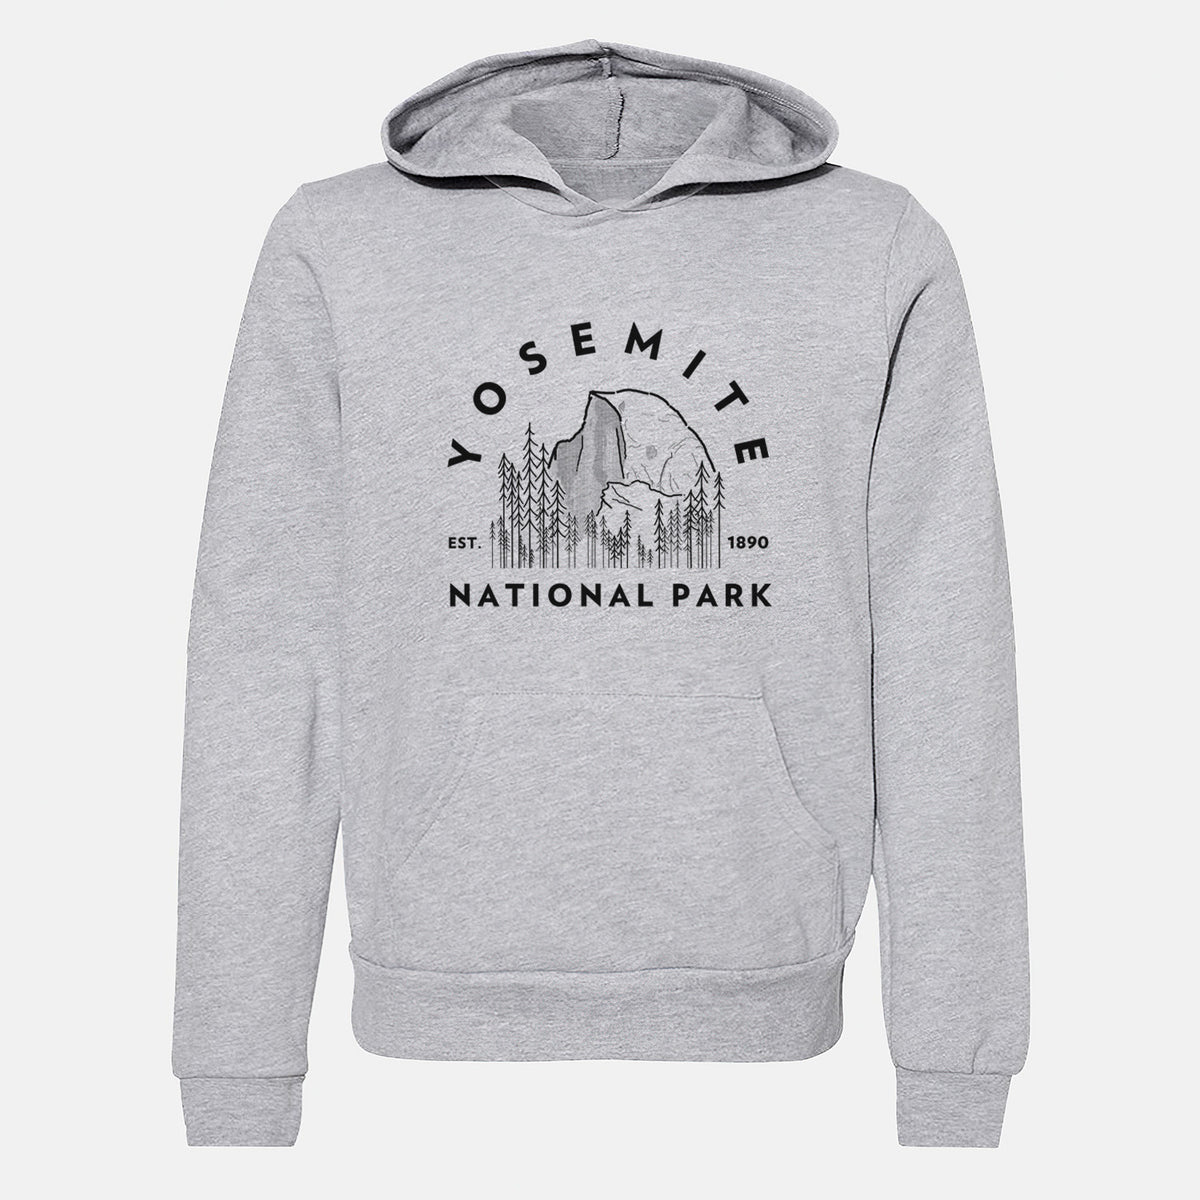 Yosemite National Park - Youth Hoodie Sweatshirt